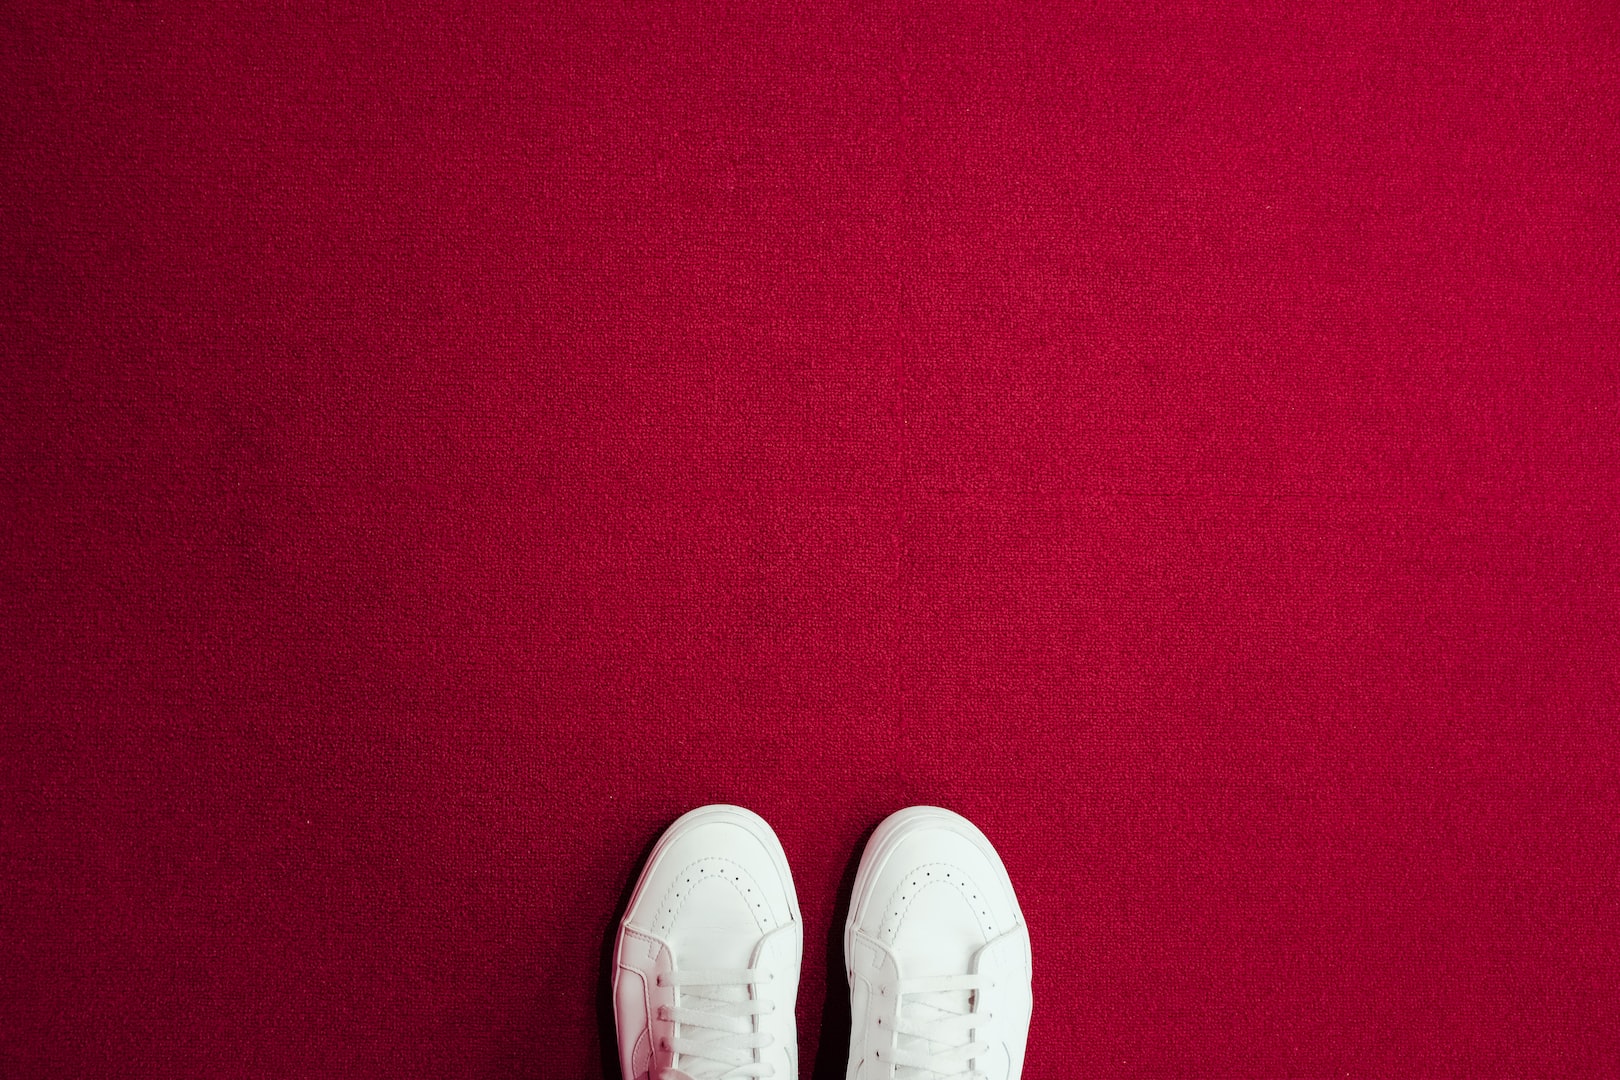 shoes on carpet